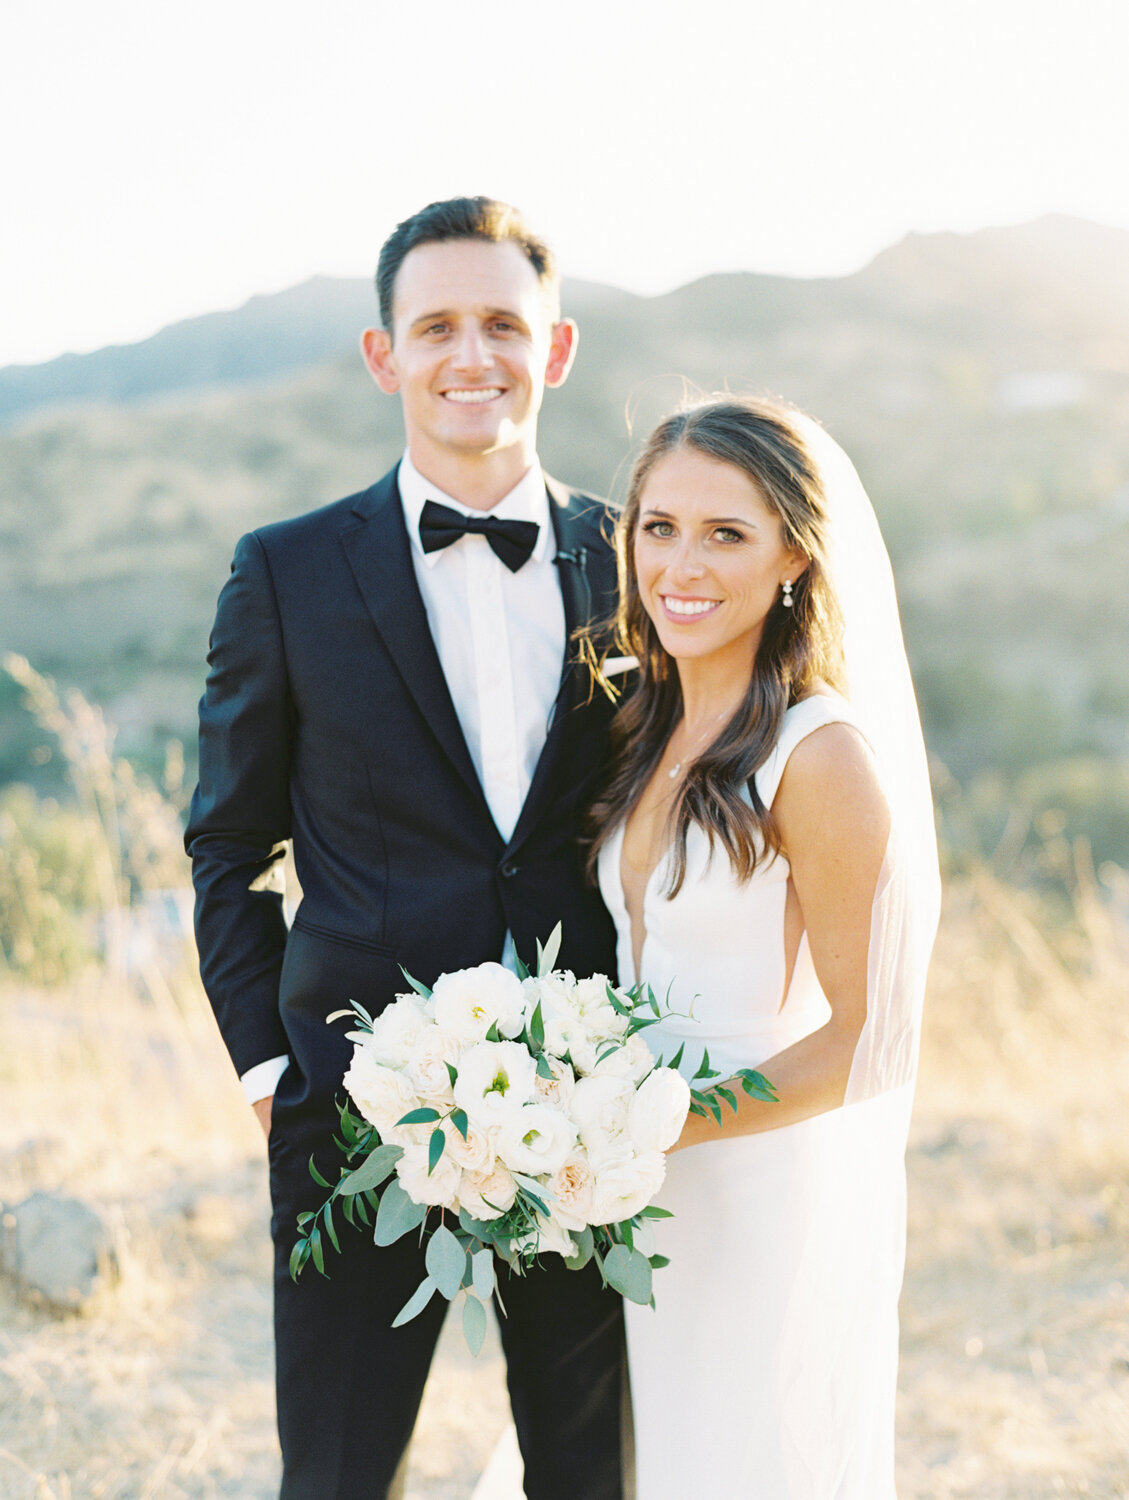 wisteria-photography.com | Wisteria Photography | Triunfo Creek Vineyards | Weddings Engagement | Southern California Photographer-25.jpg